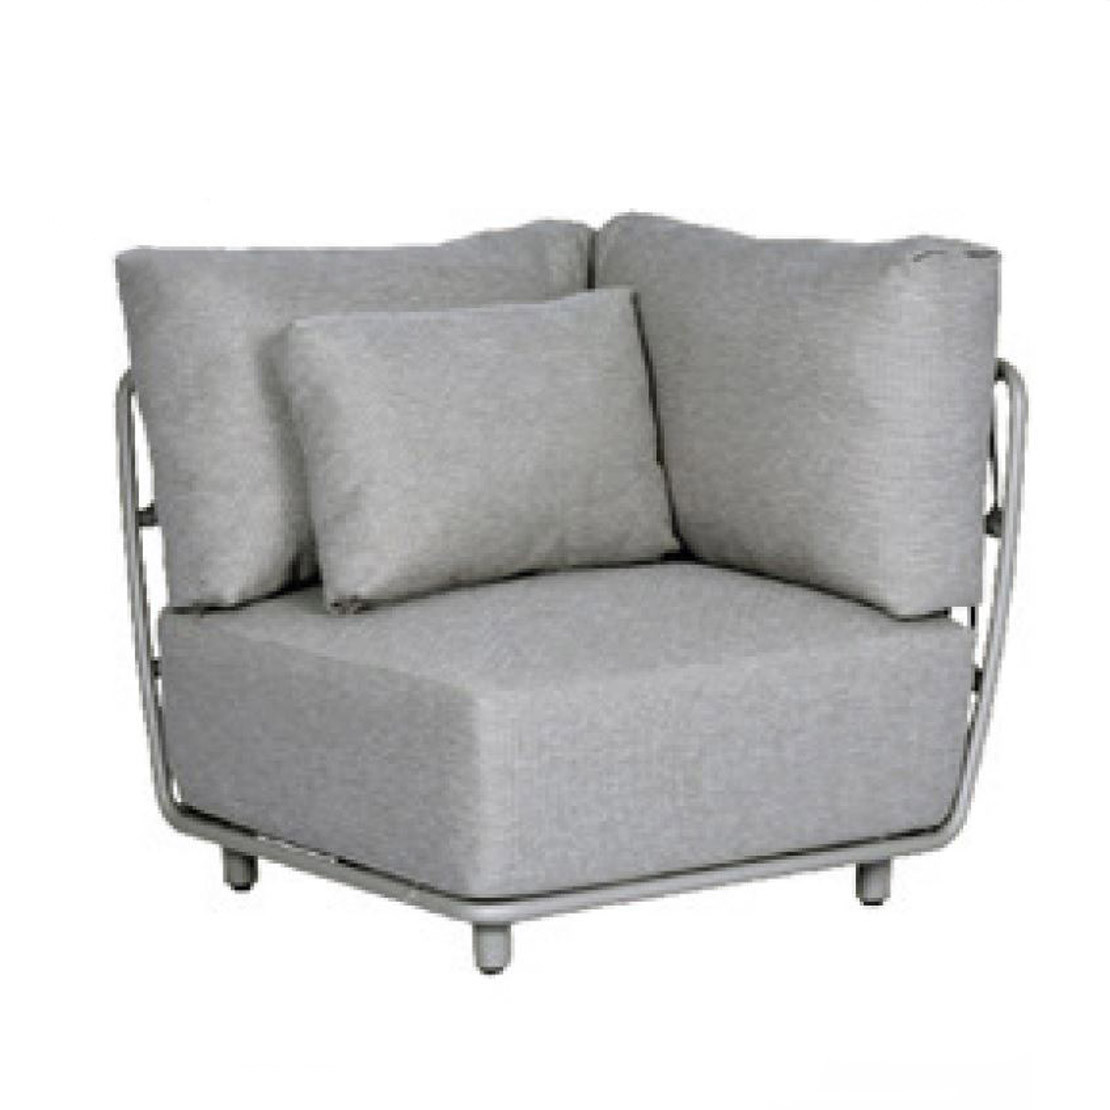 Evolve corner grey metalic with 4 cushions